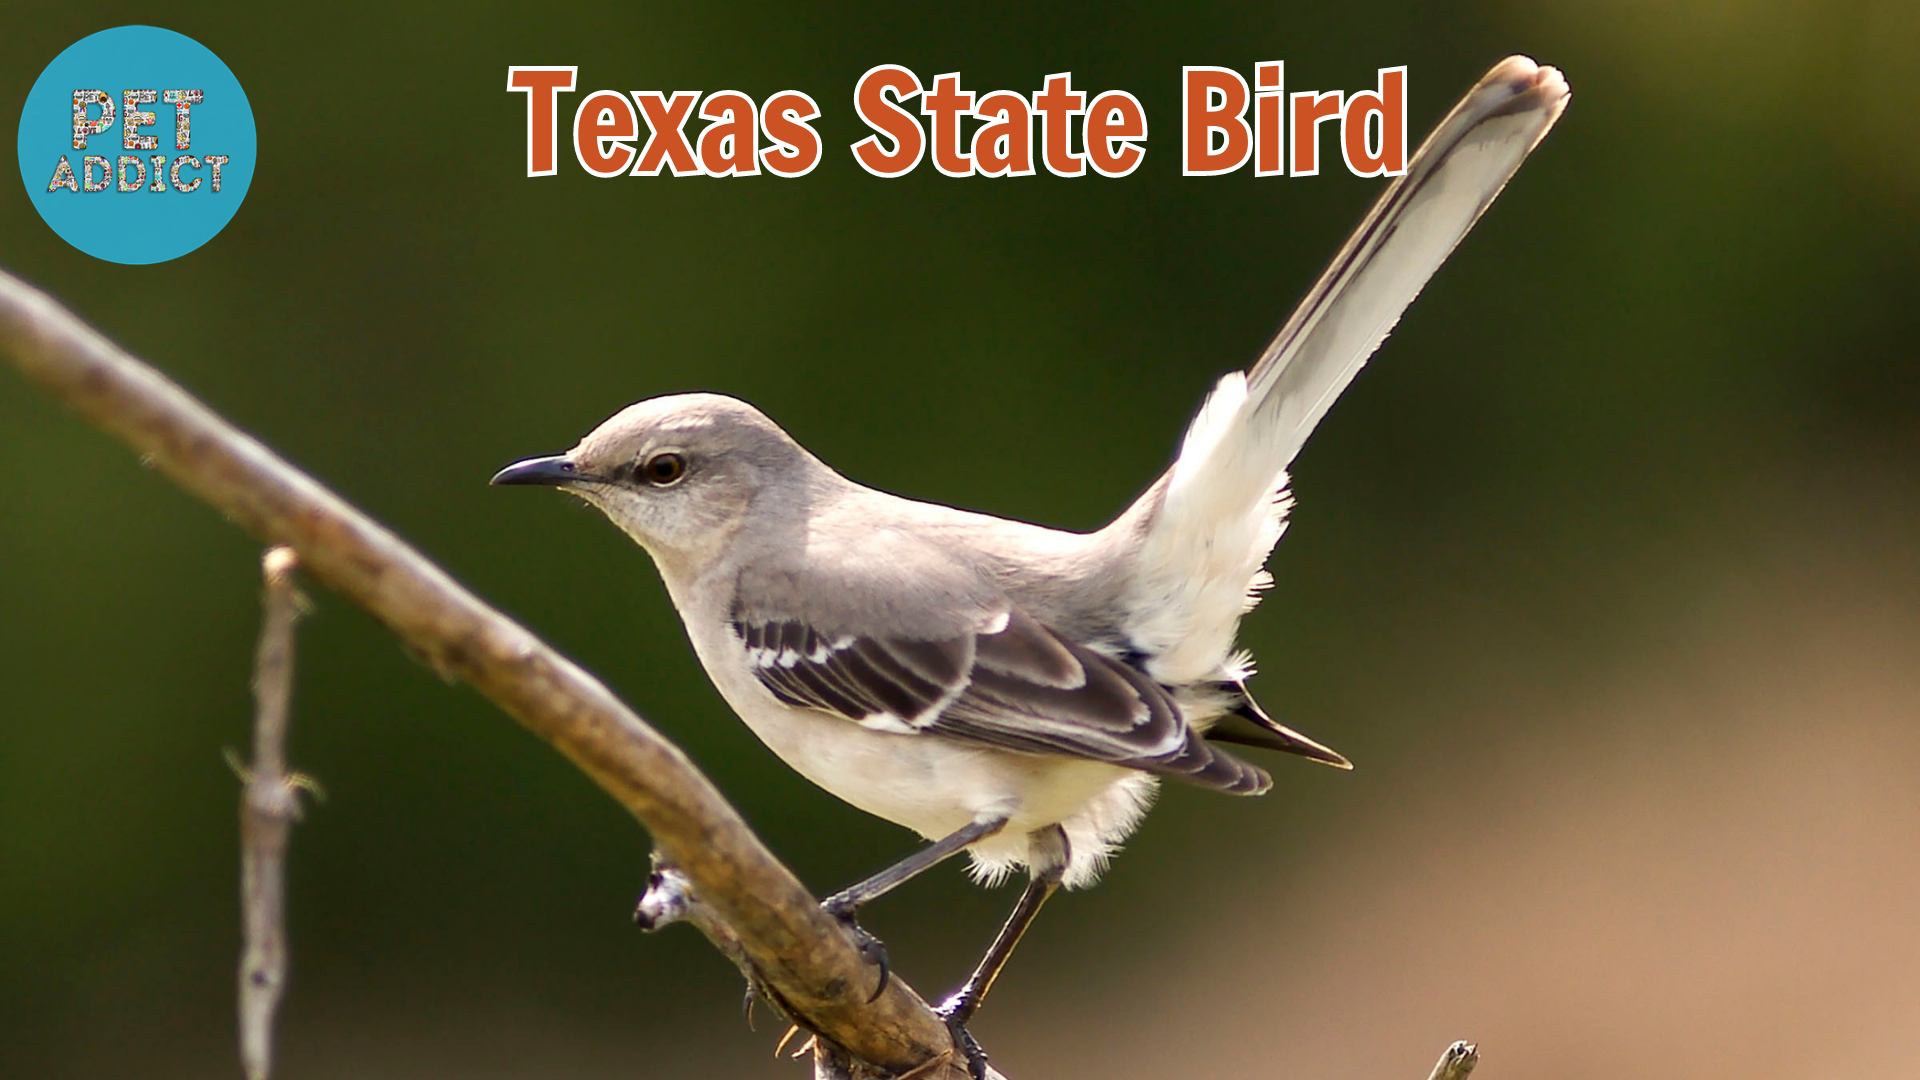 Texas State Bird: The Northern Mockingbird